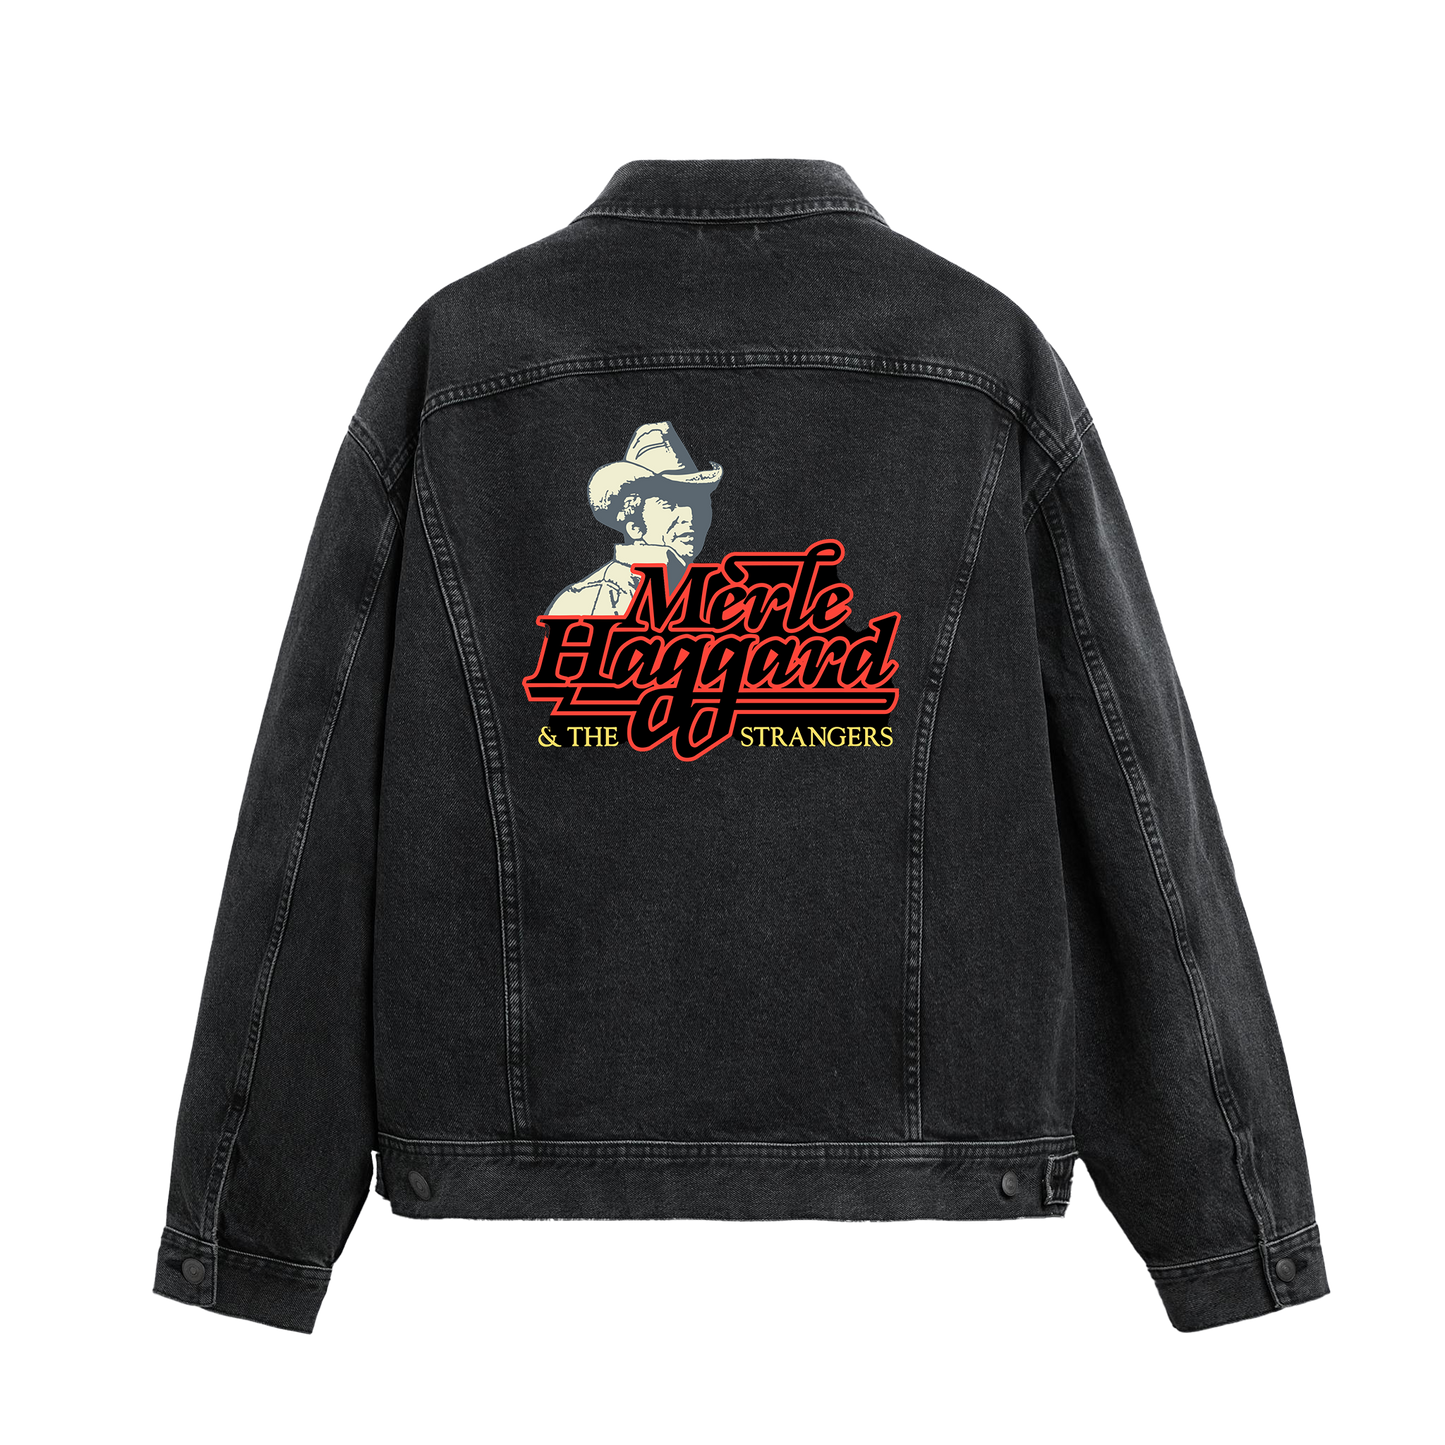 Black Denim Jacket (Pre-Order)